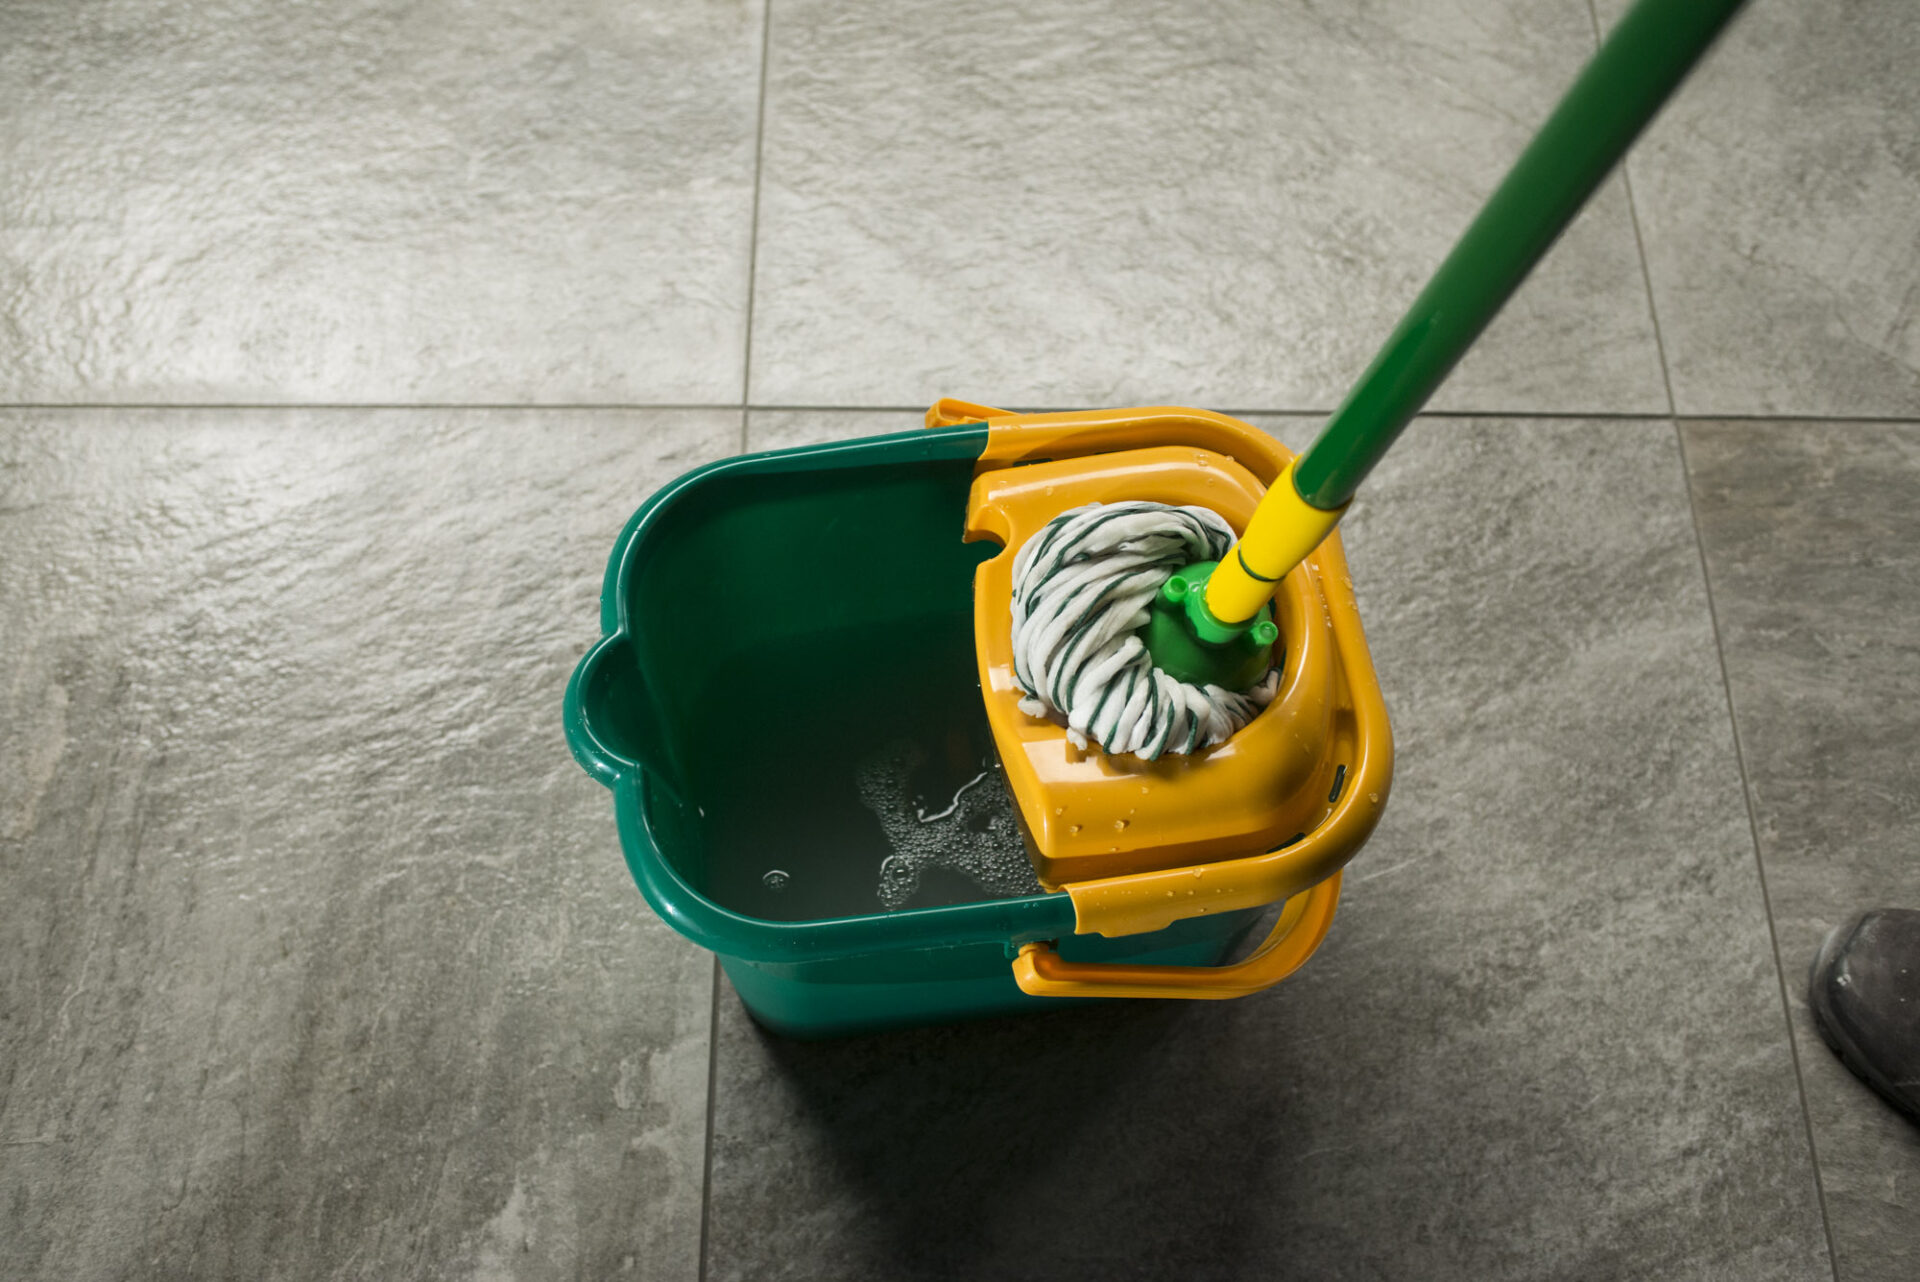 Come pulire i pavimenti esterni: consigli pratici